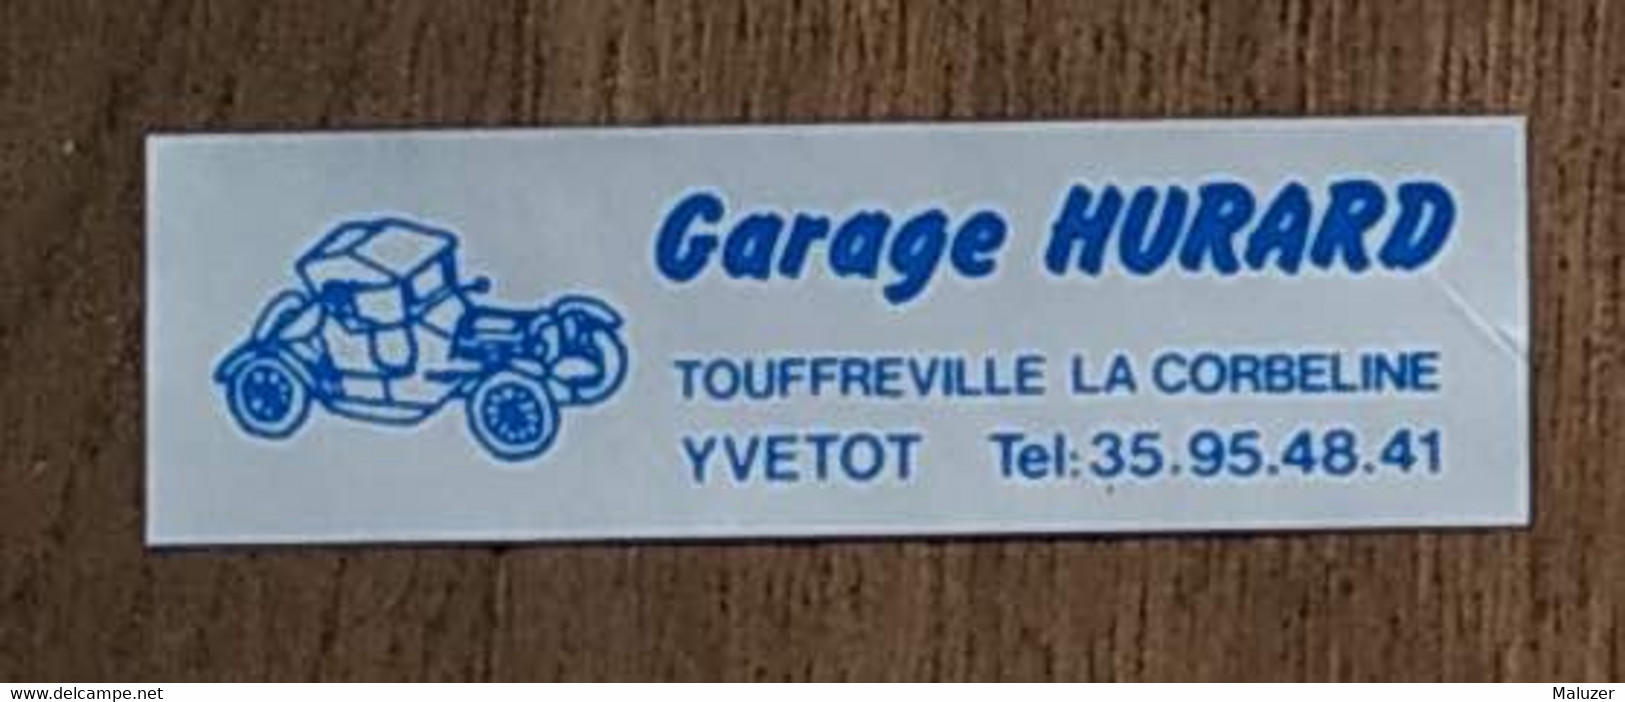 AUTOCOLLANT STICKER - GARAGE HURARD - TOUFFREVILLE LA CORBELINE - AUTOMOBILE VOITURE - SEINE MARITIME NORMANDIE - Stickers